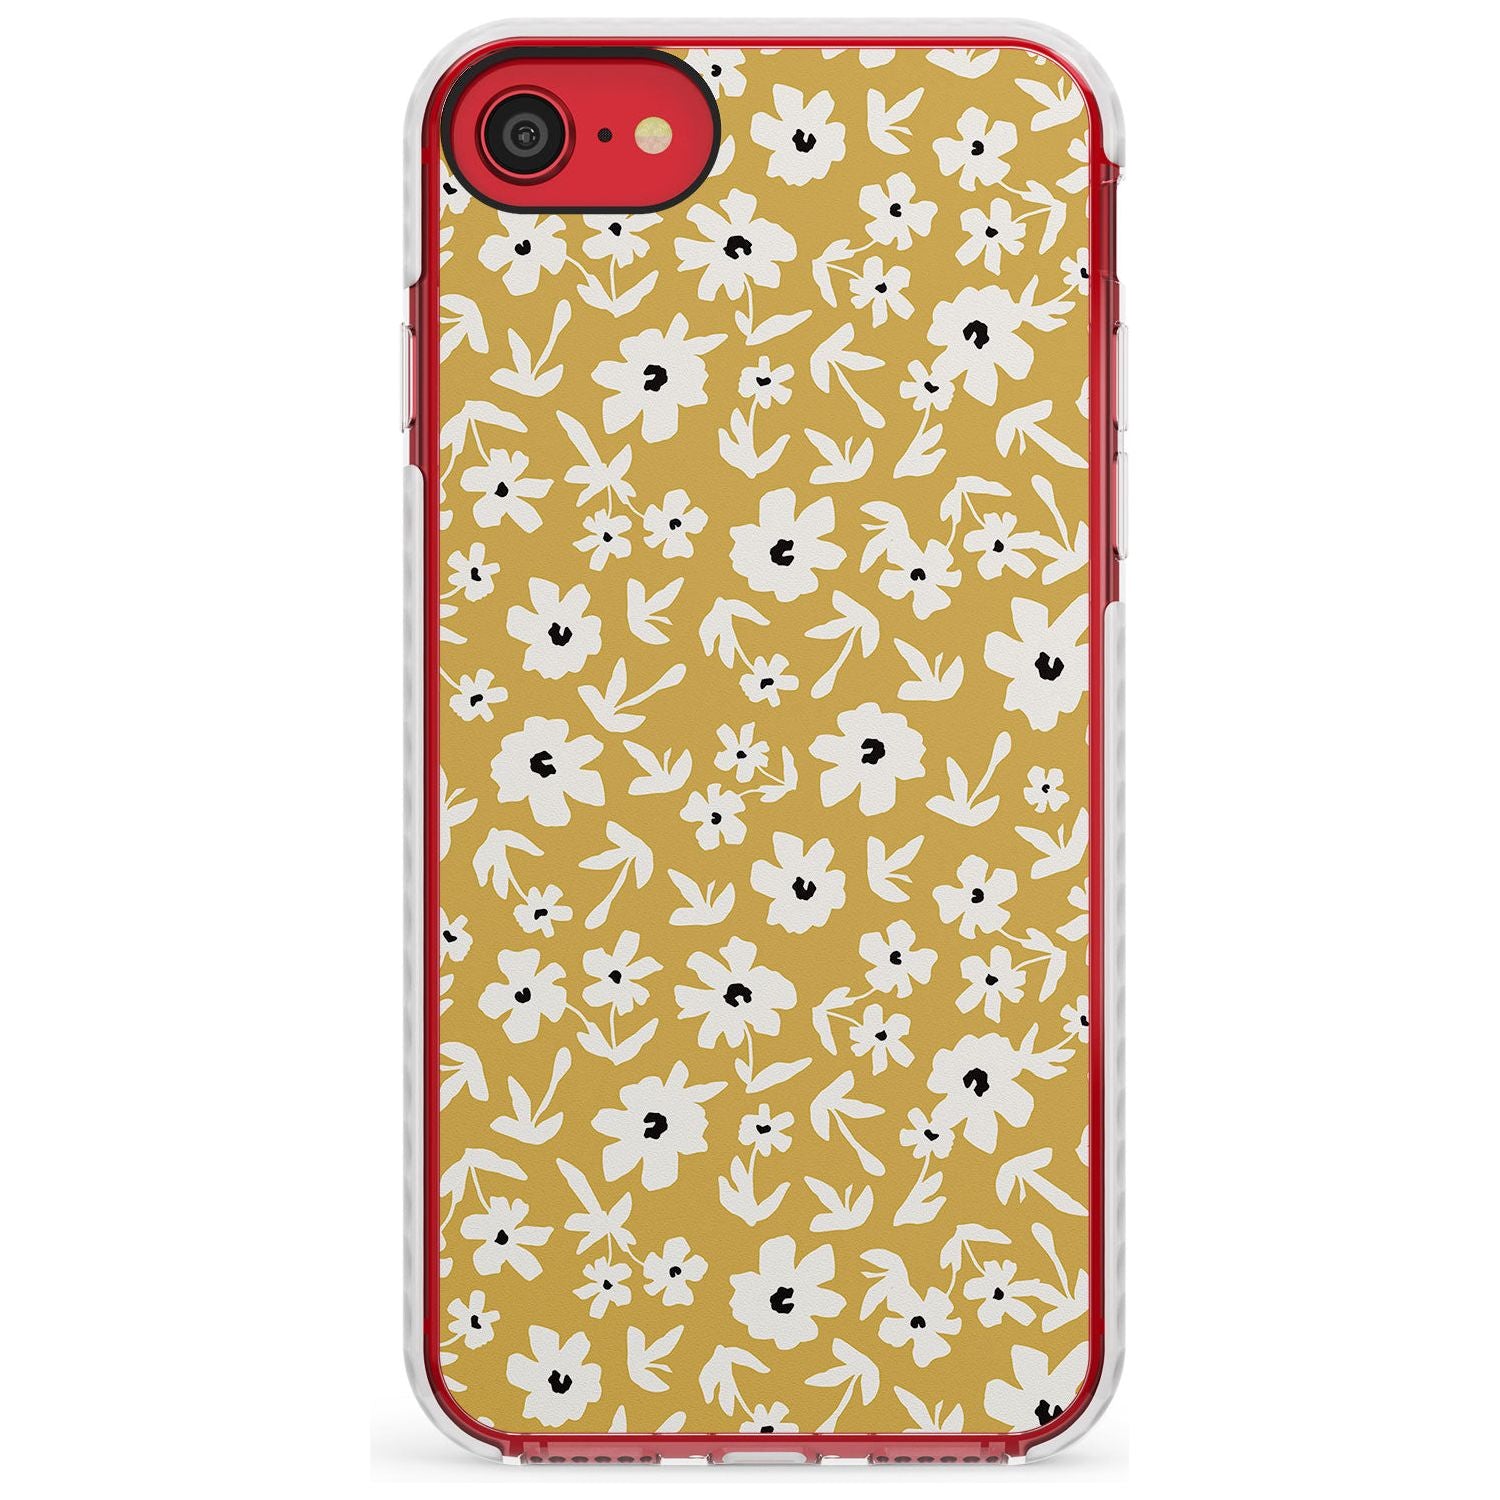 Floral Print on Mustard - Cute Floral Design Slim TPU Phone Case for iPhone SE 8 7 Plus